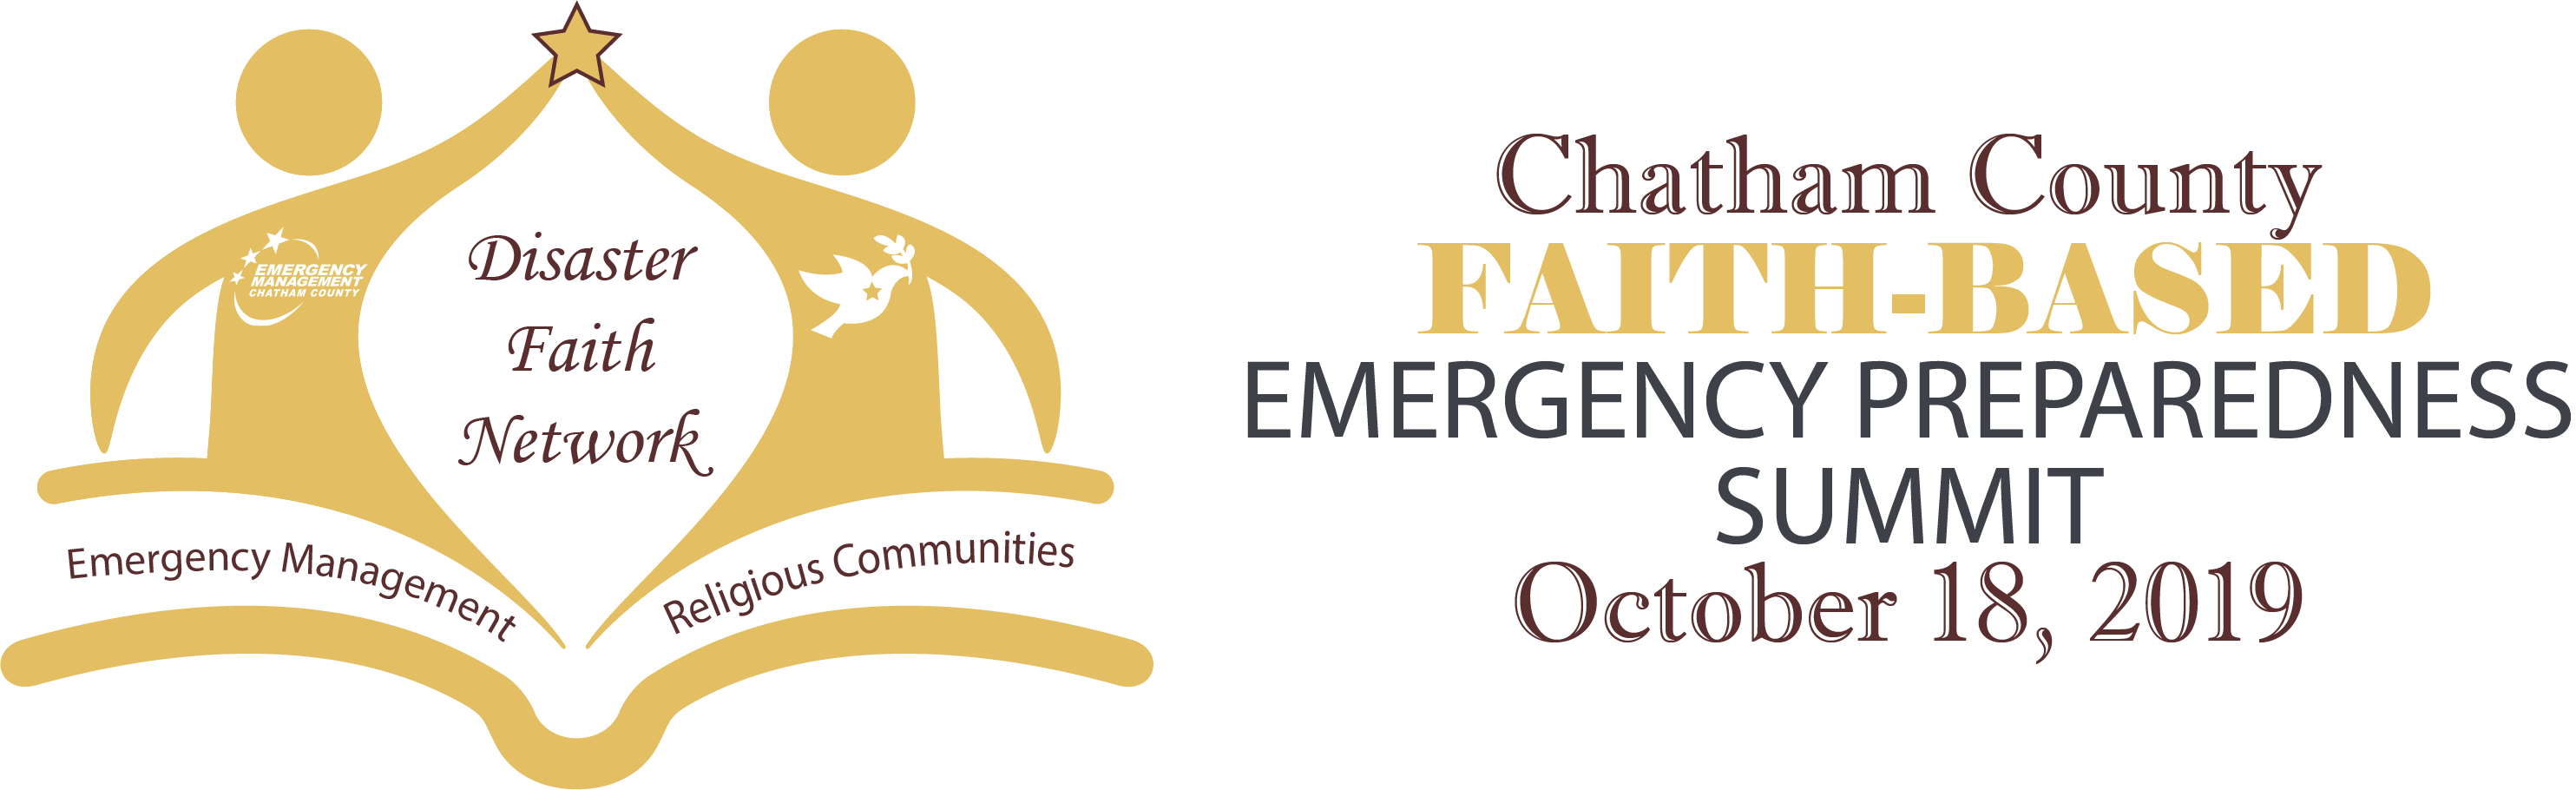 Chatham County Faith-Based Emergency Preparedness Summit Logo